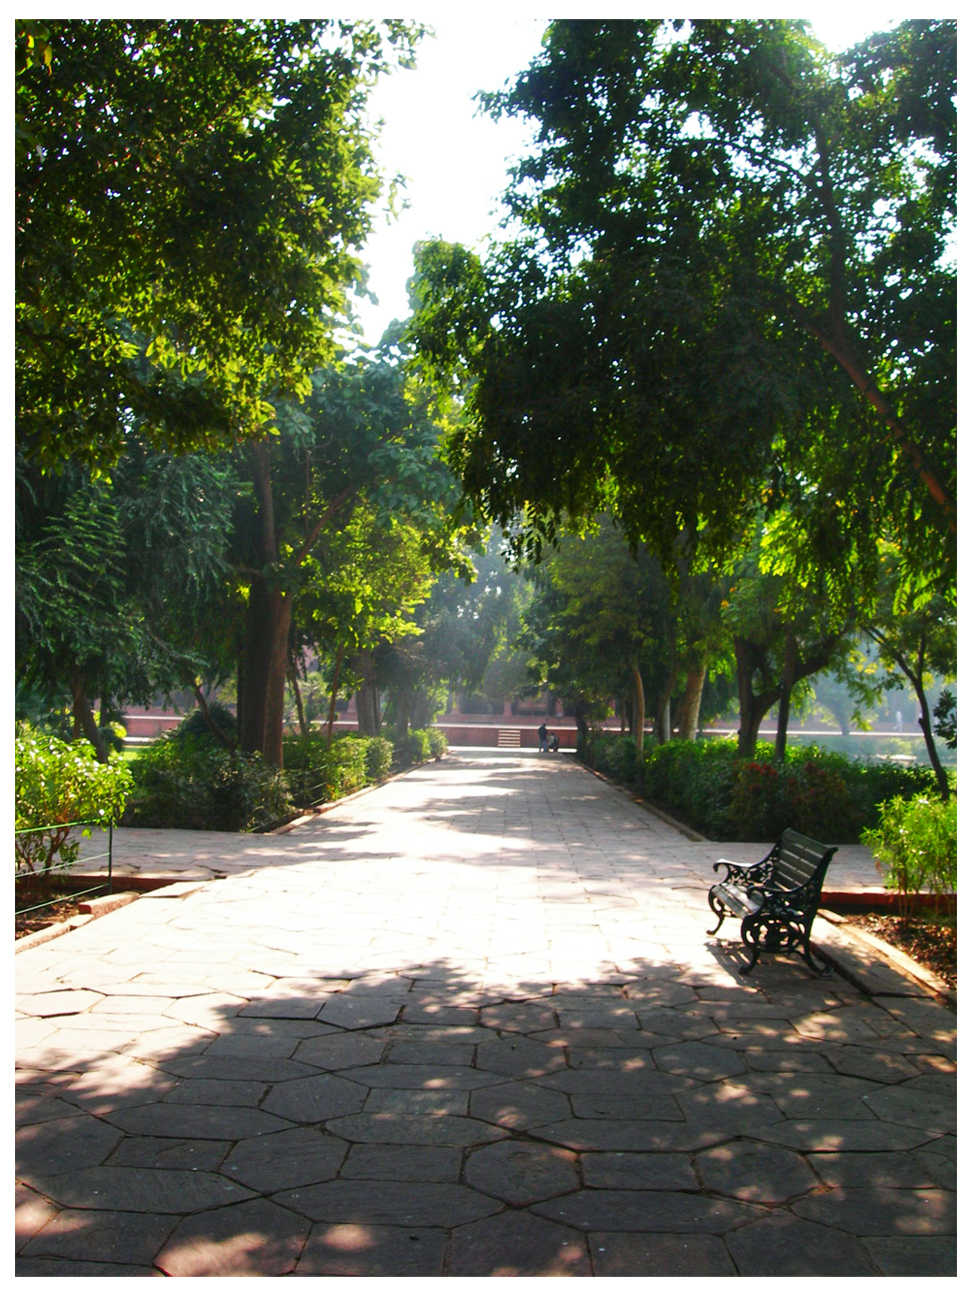 Empty Bench - Taj Mahal Garden